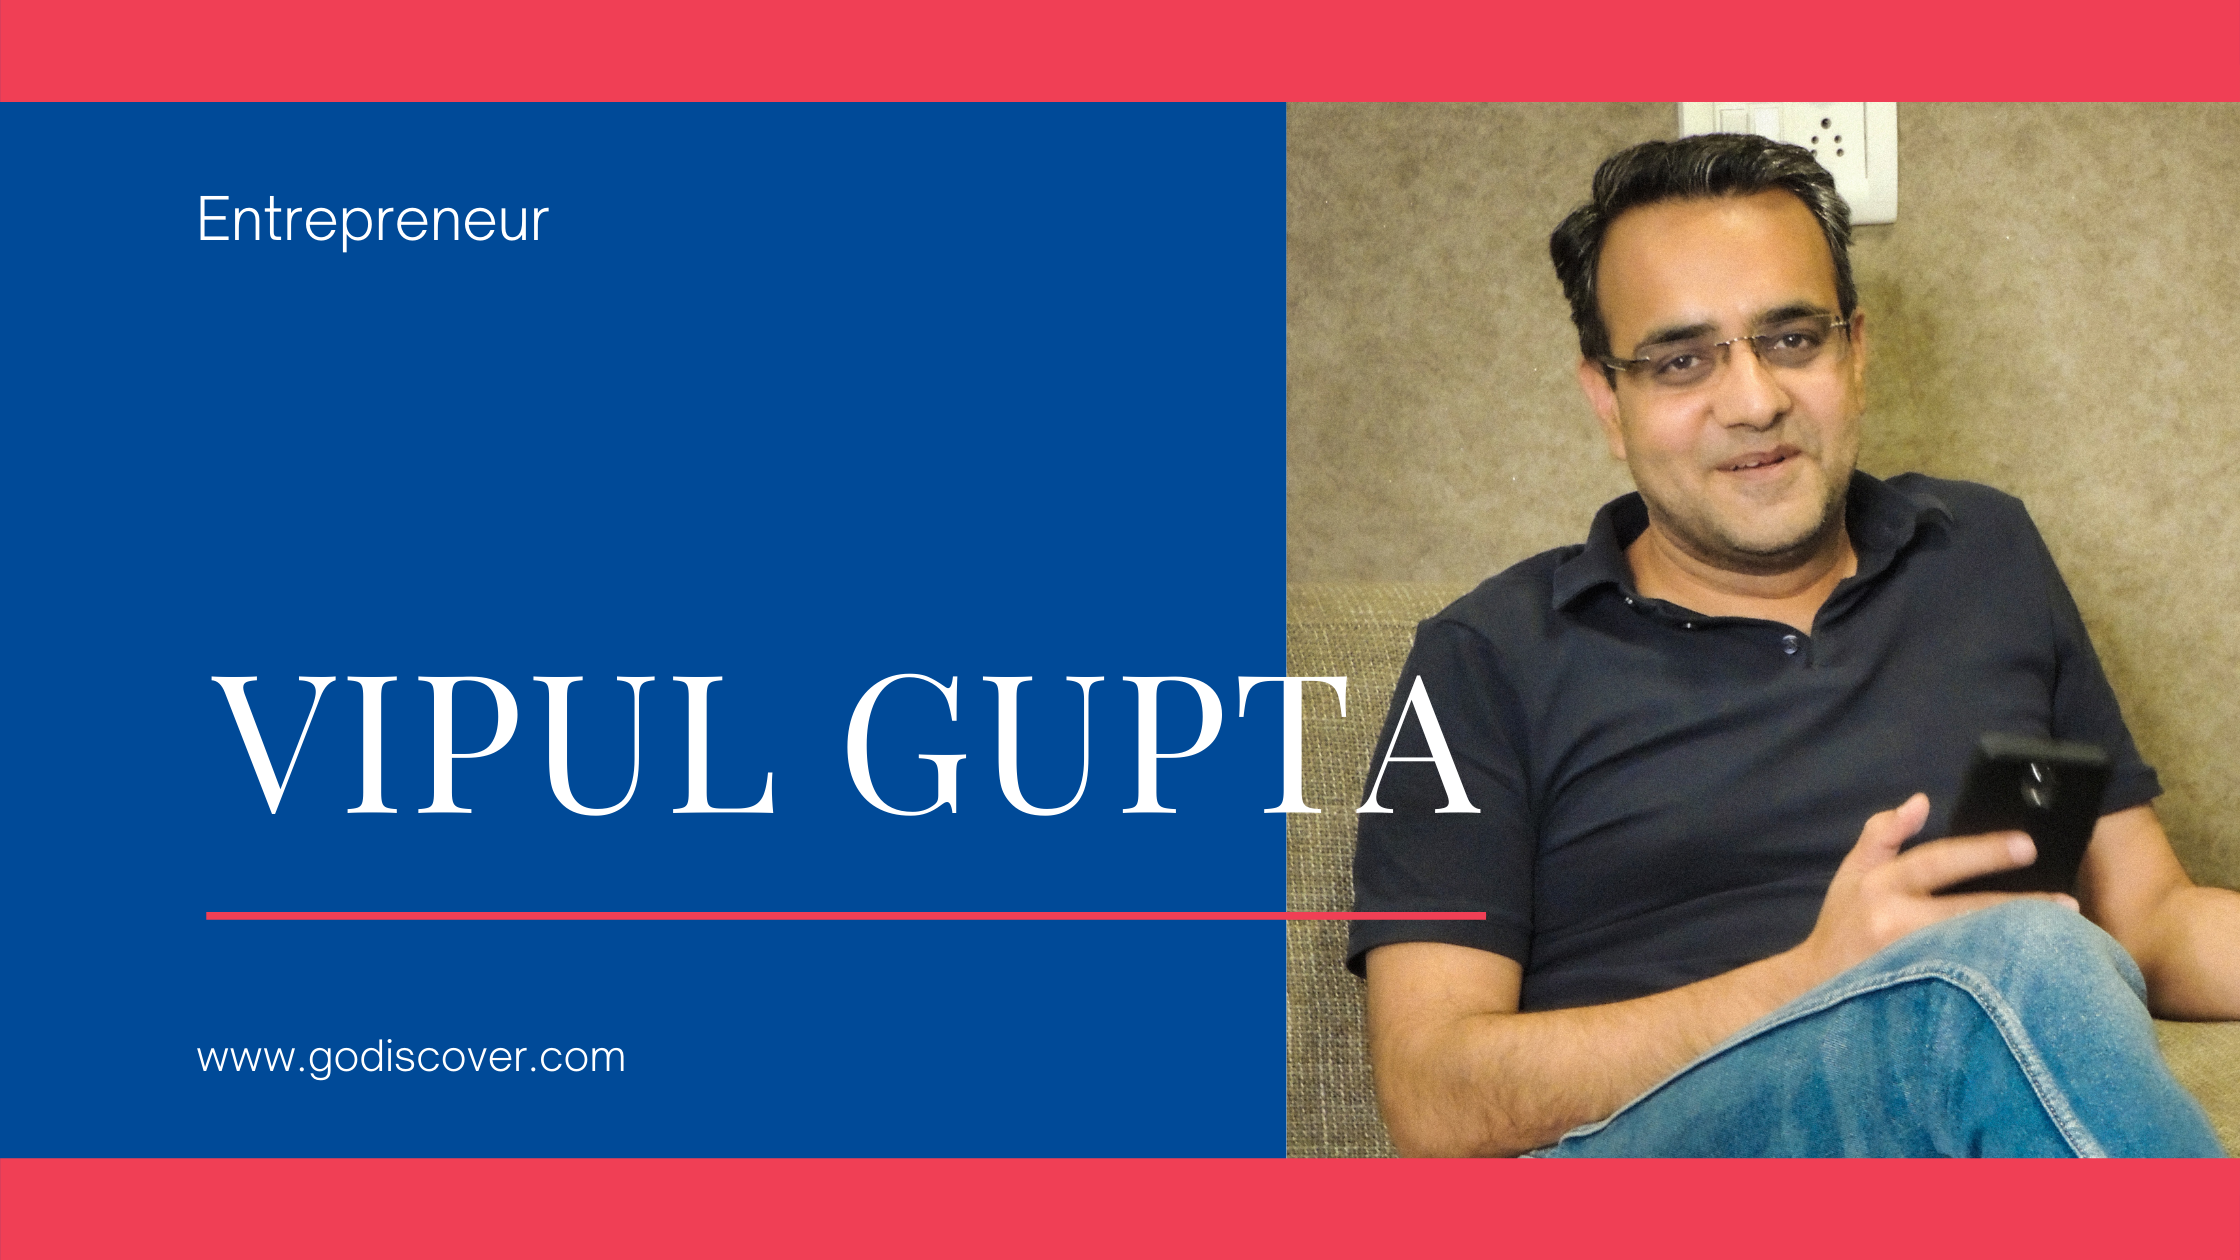 Vipul Gupta founder of goDiscover